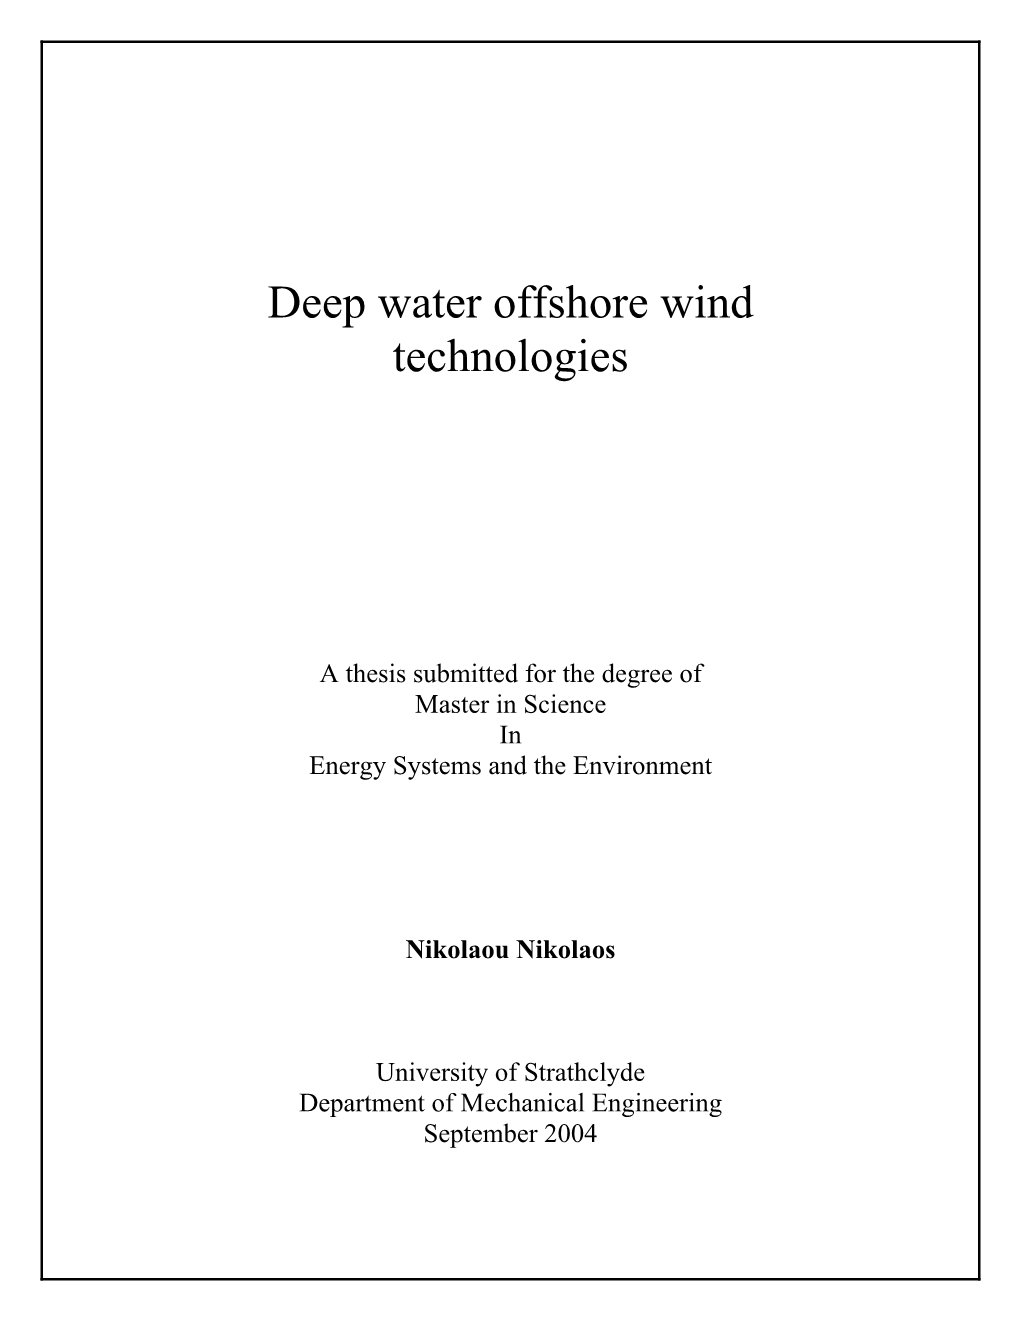 Deep Water Offshore Wind Technologies